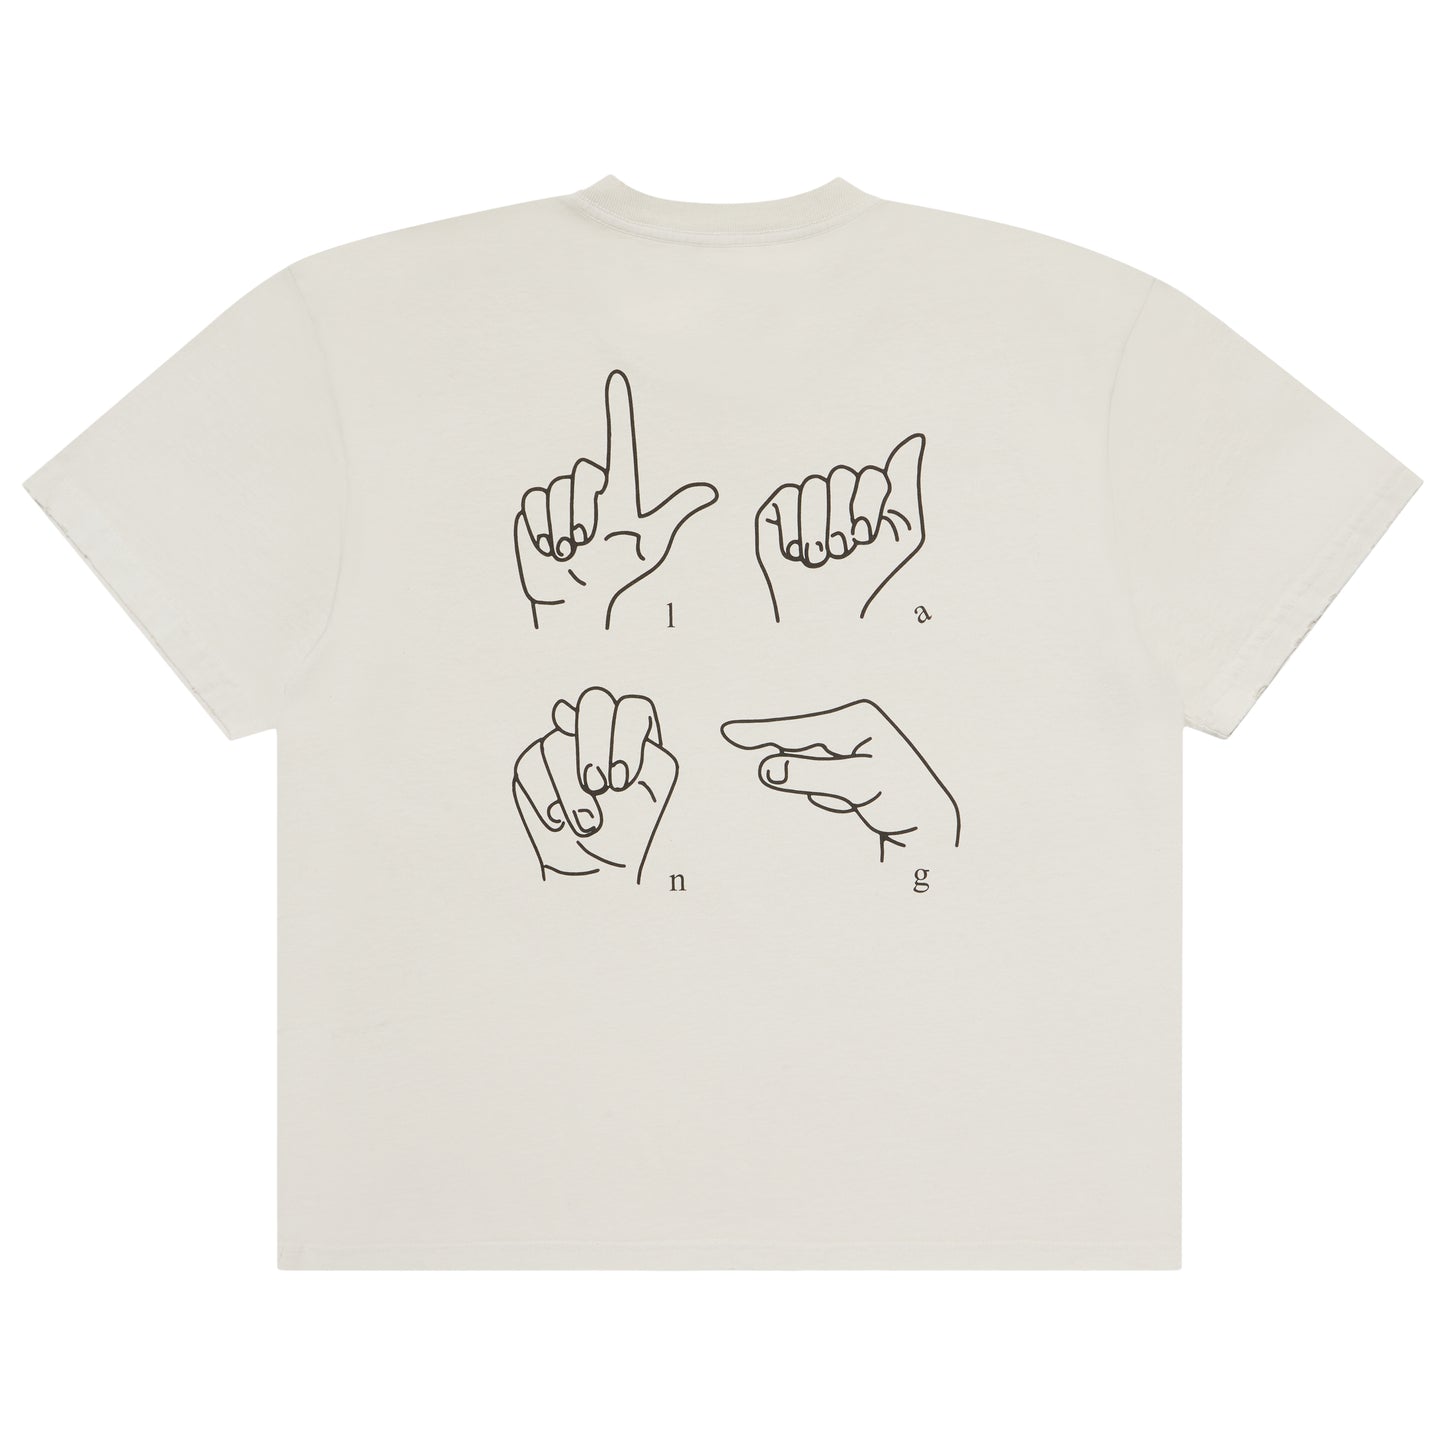 Sign Language Distressed T-Shirt